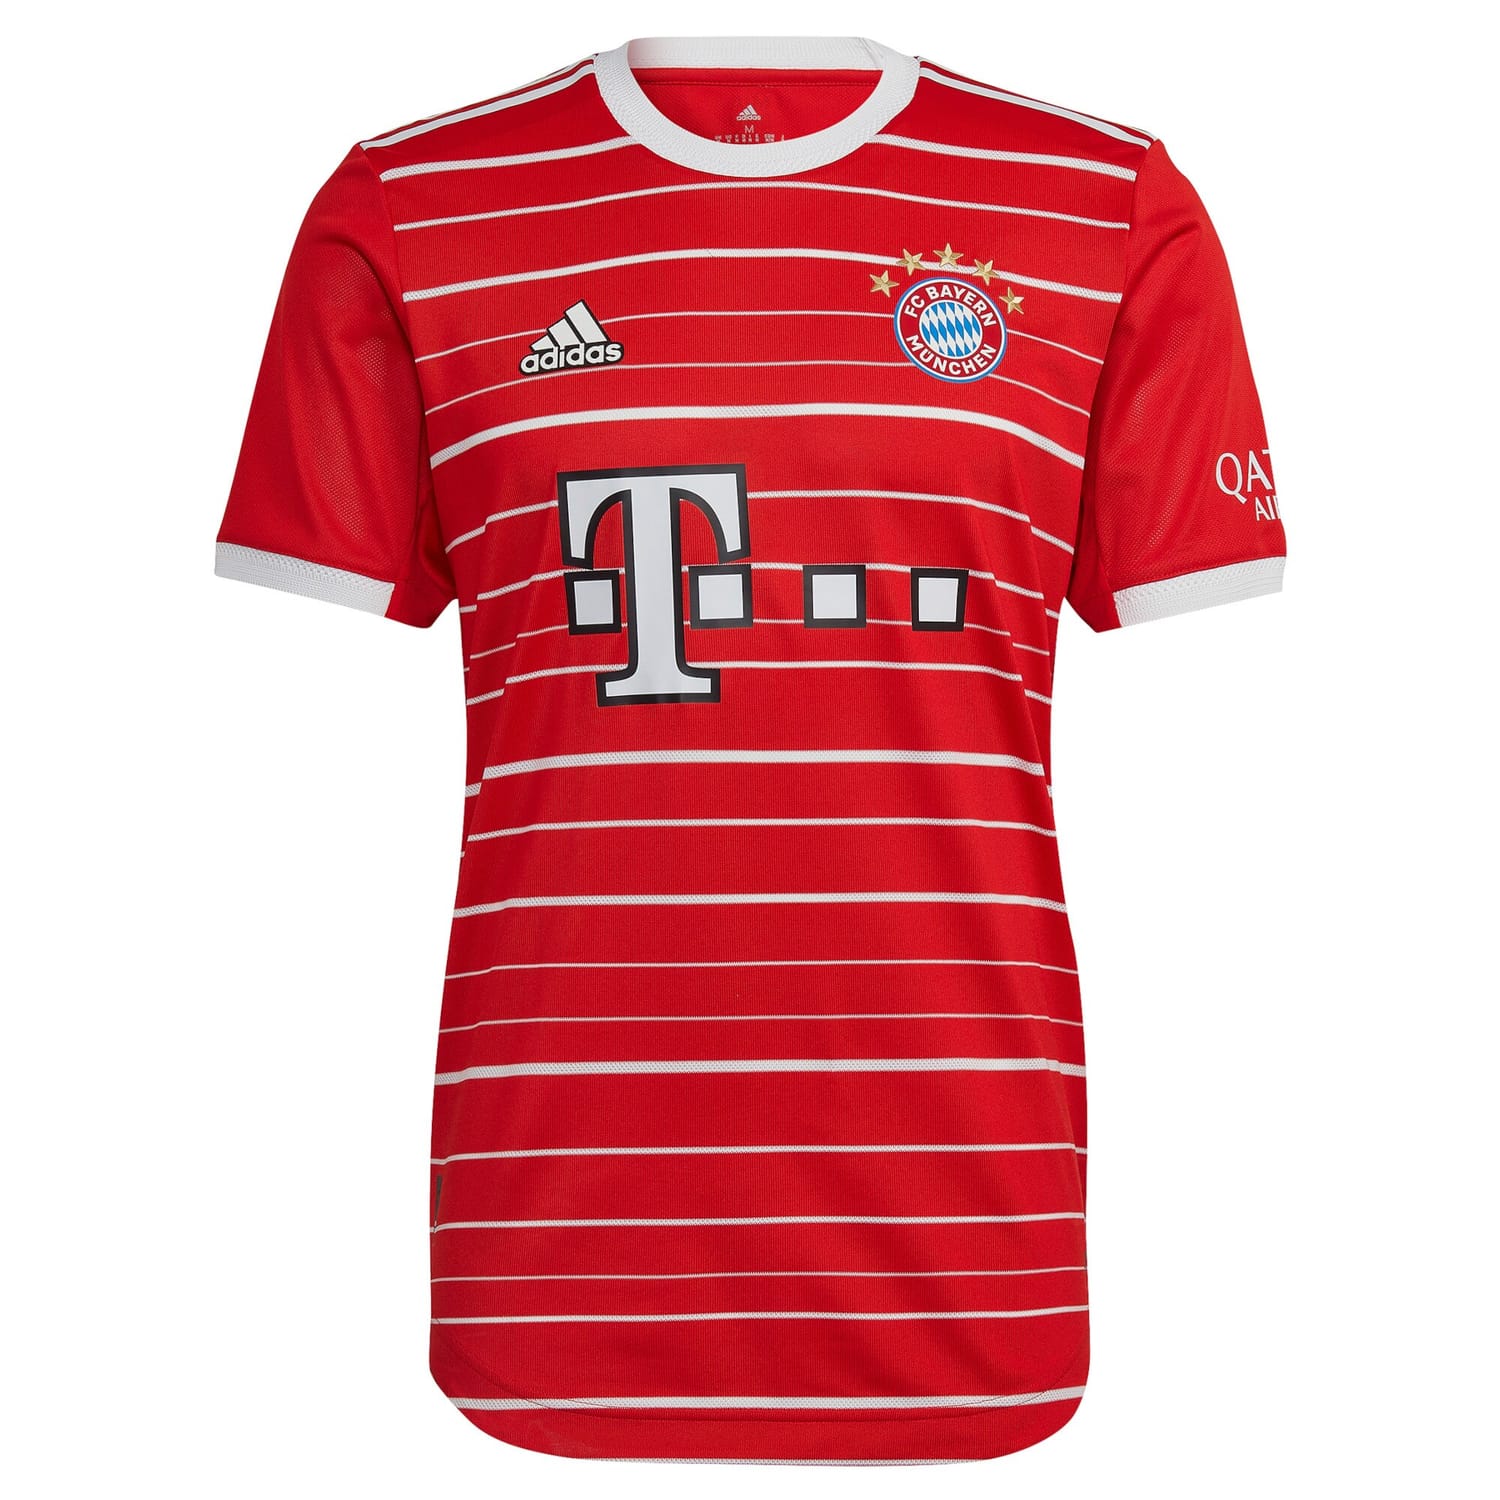 Bundesliga Bayern Munich Home Authentic Jersey Shirt 2022-23 player Leroy Sané 10 printing for Men